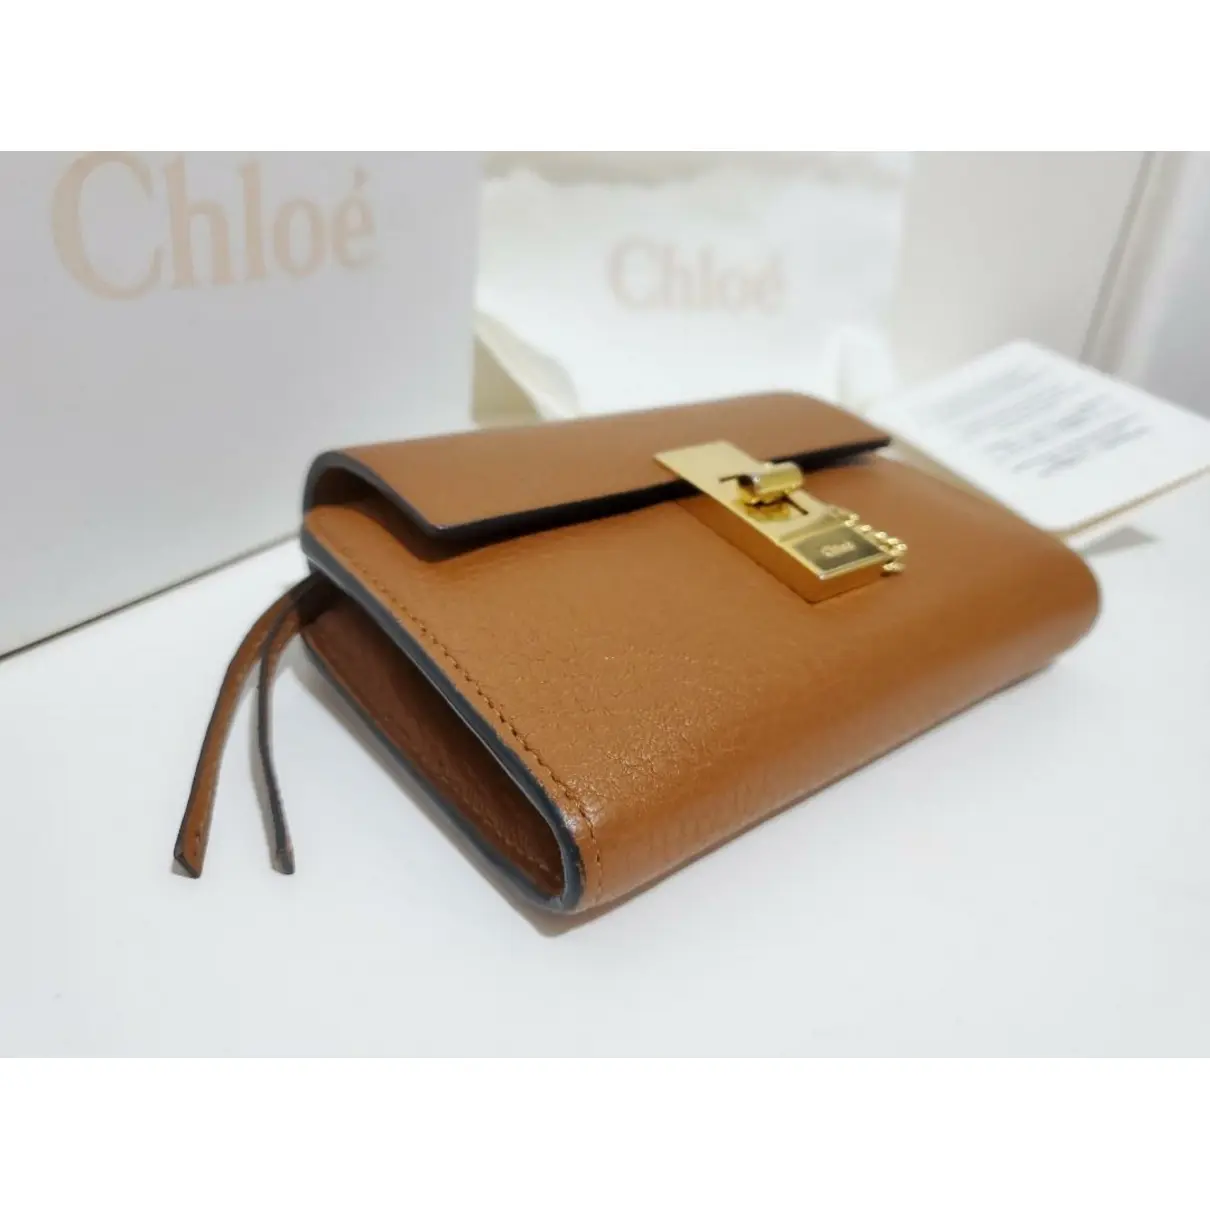 Buy Chloé Drew leather purse online